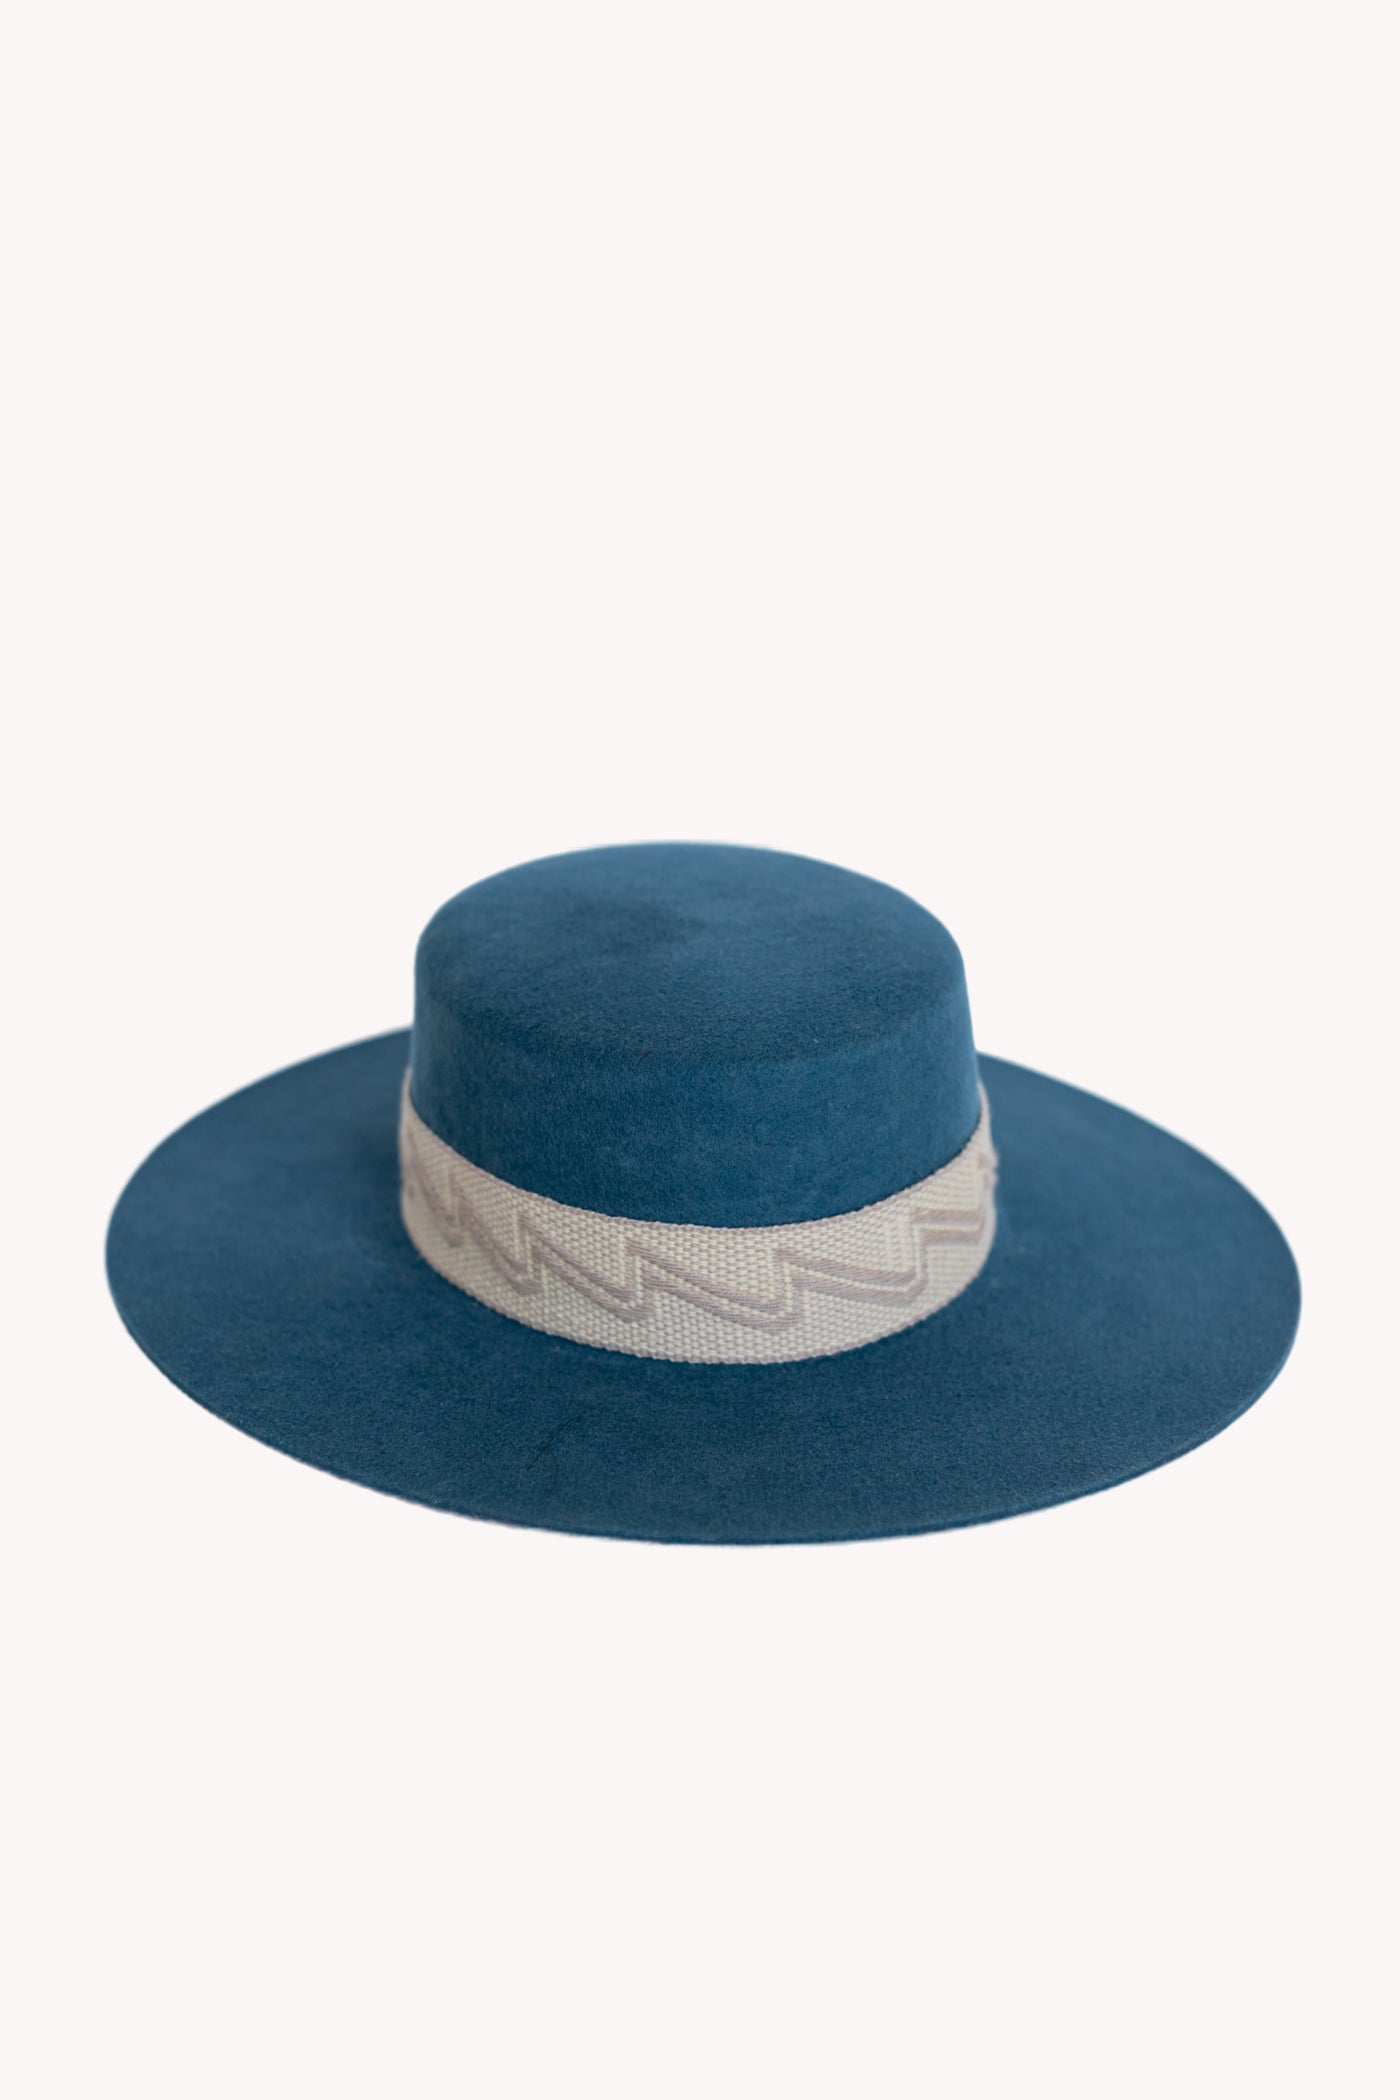 Blue Spanish style hat